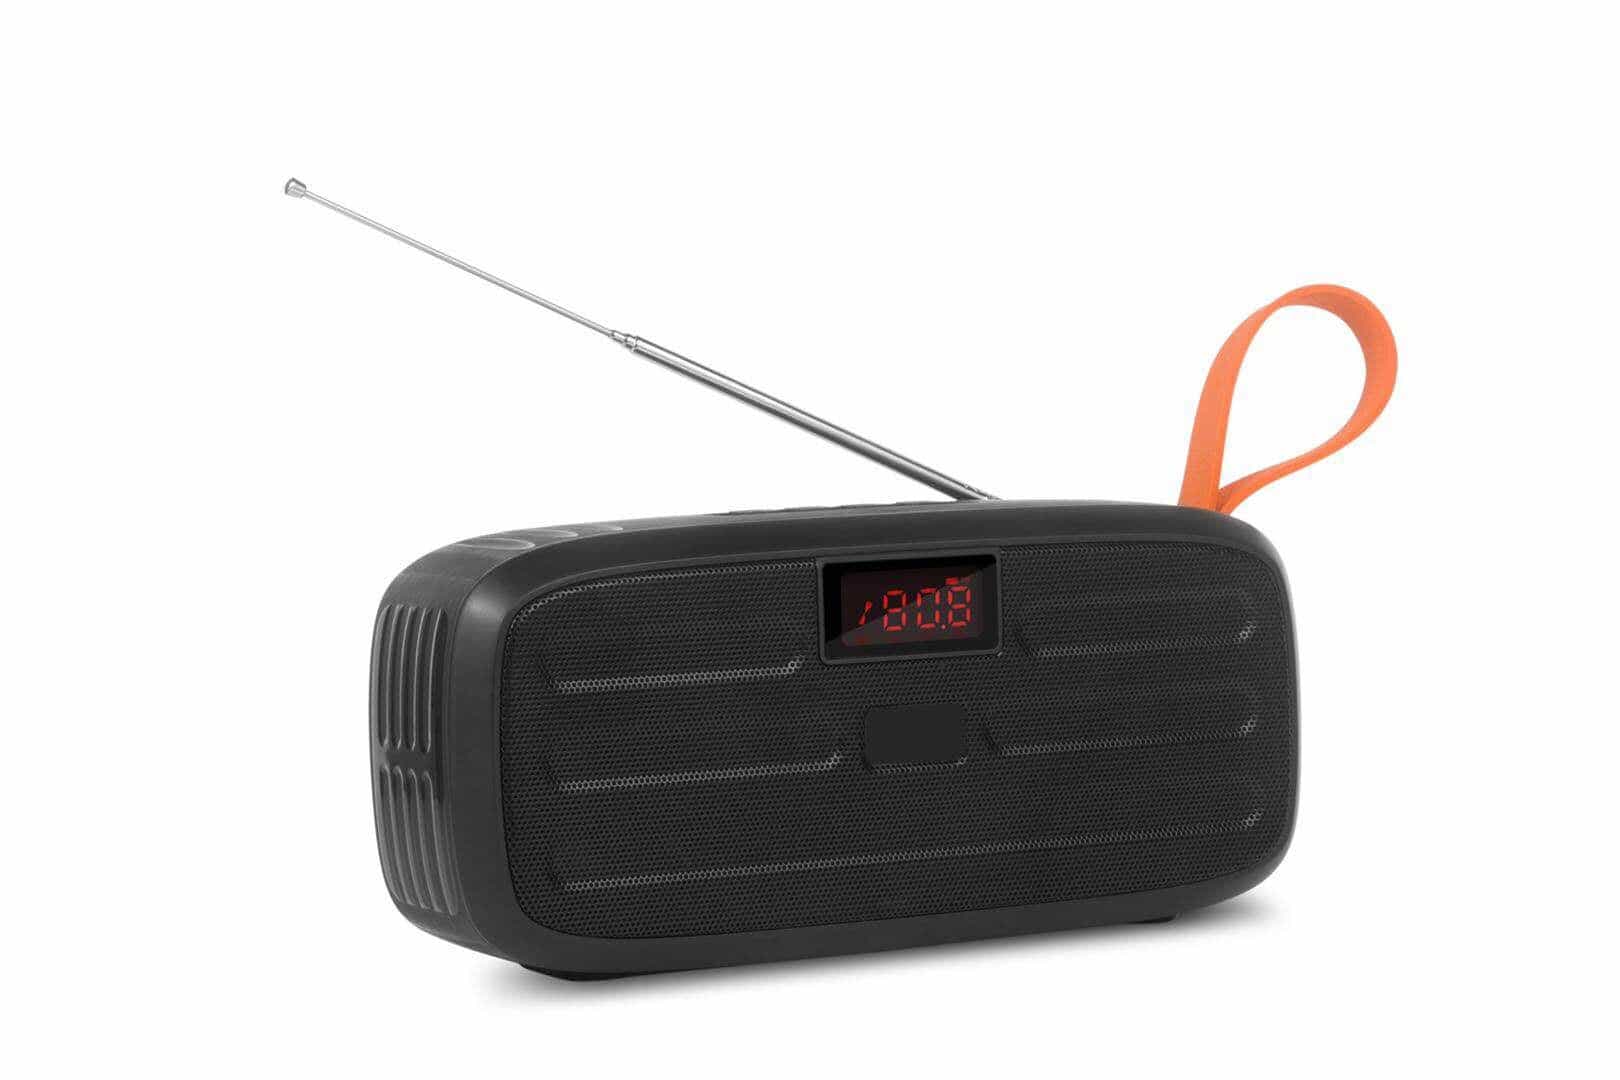 Bluetooth speaker with fm radio